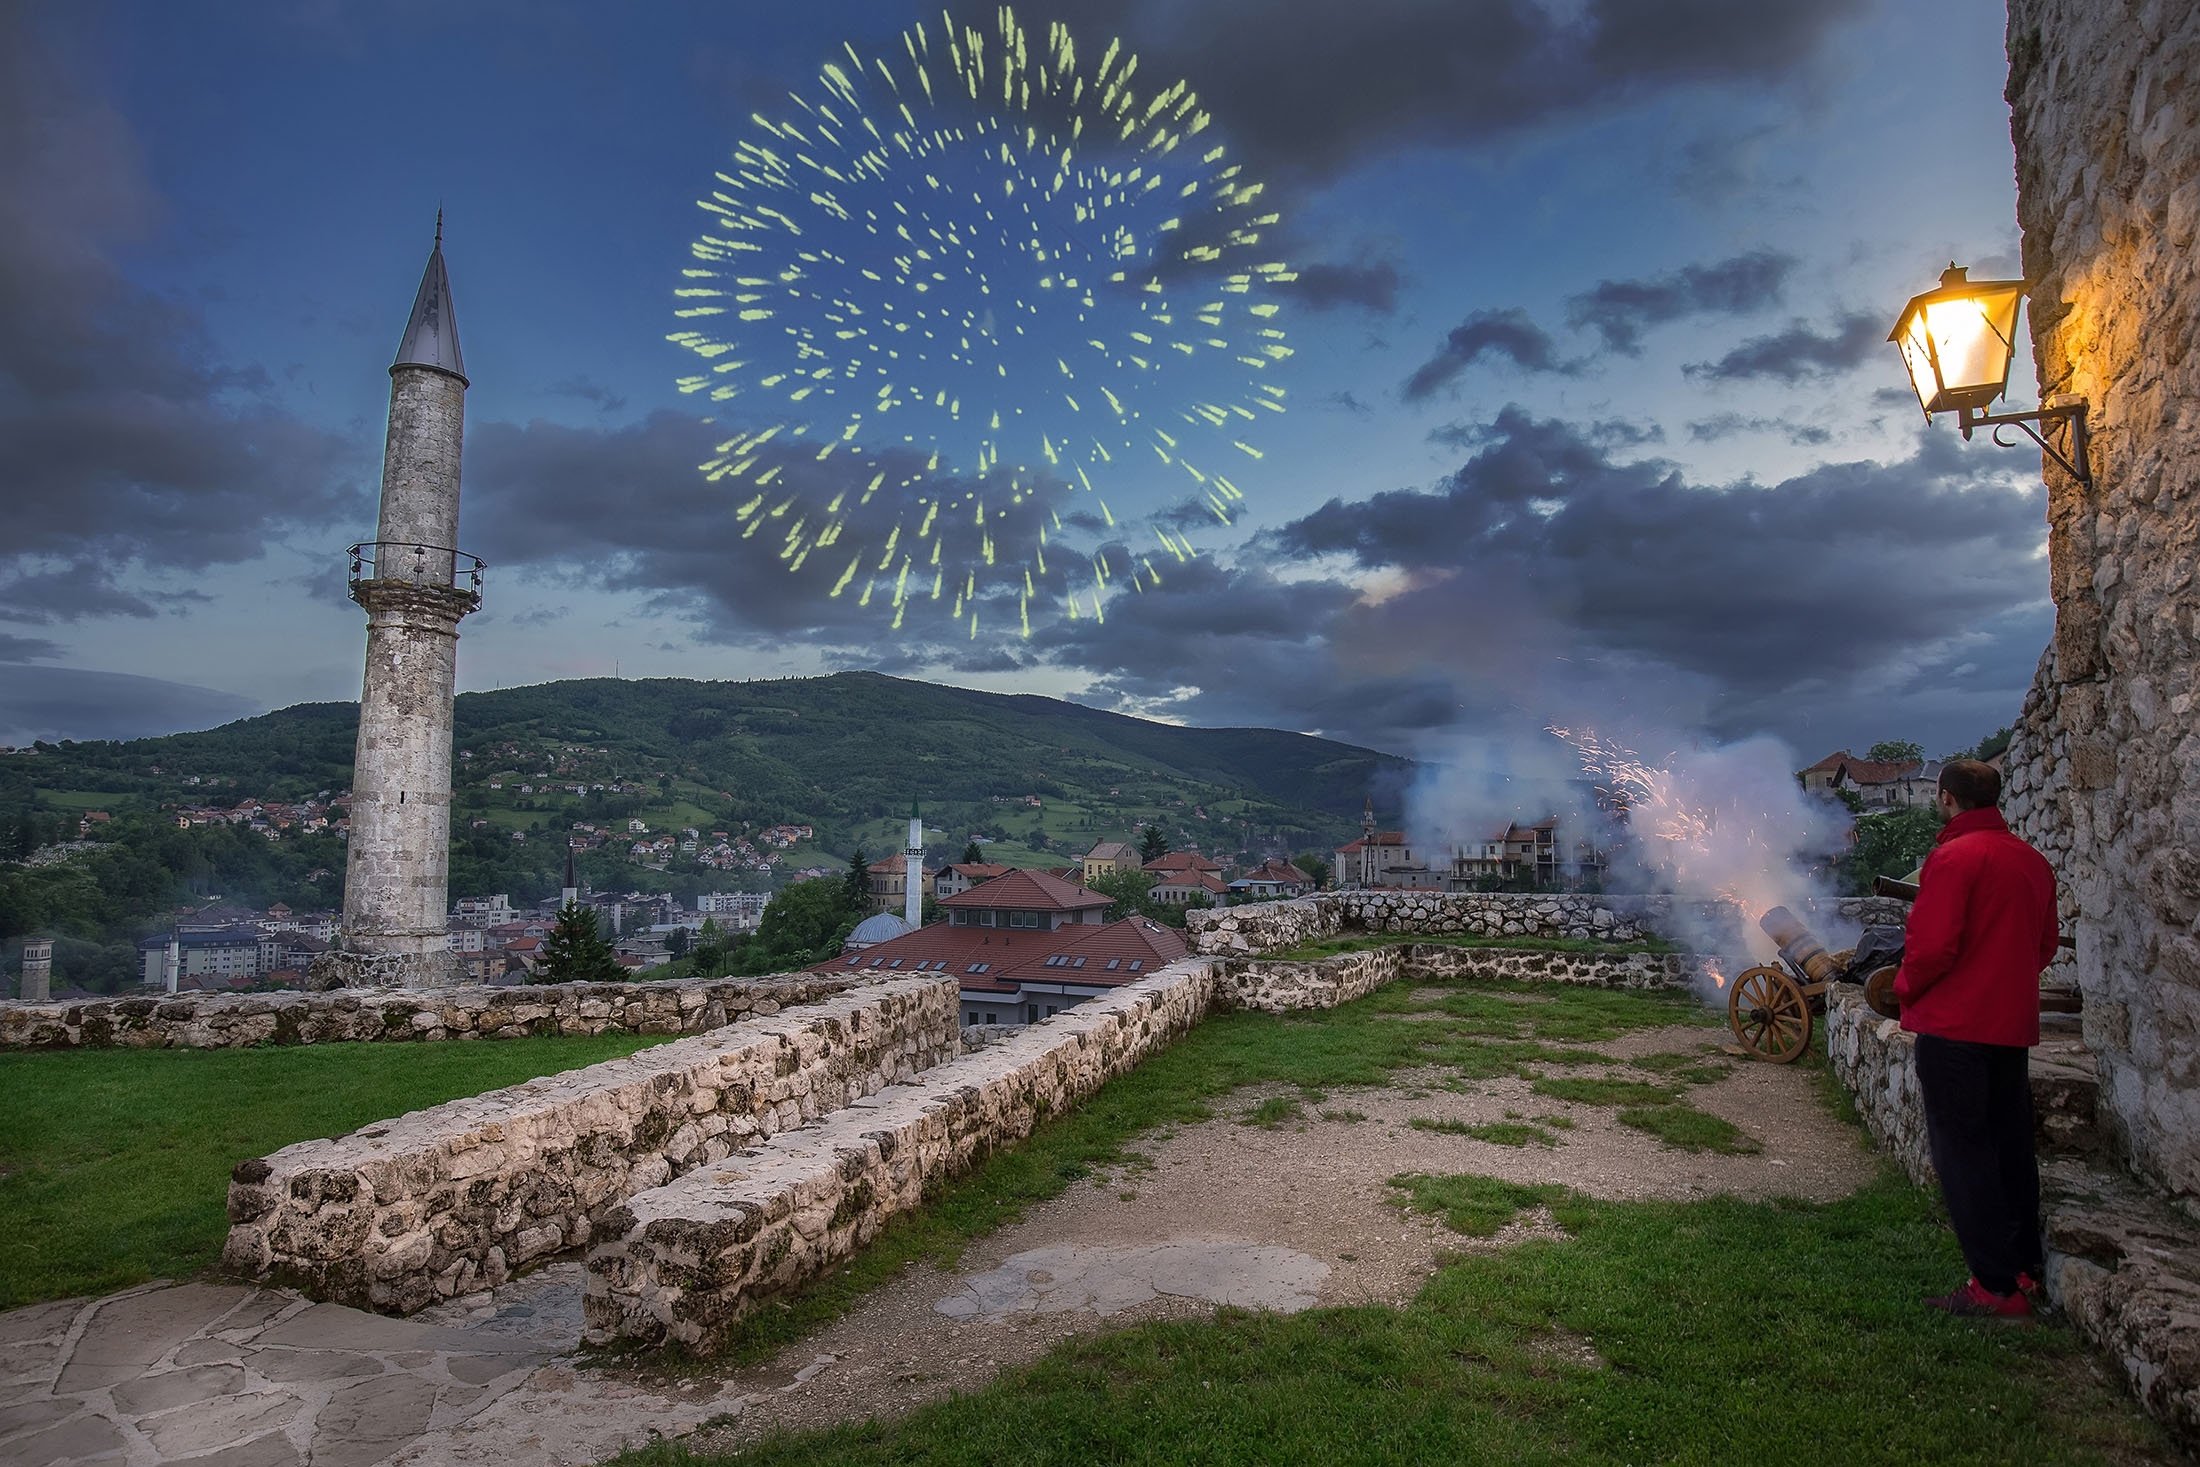 Kembang api tradisional meledak untuk menandai berakhirnya puasa Ramadhan dan datangnya Idul Fitri di Bosnia-Herzegovina.  (Foto Shutterstock)